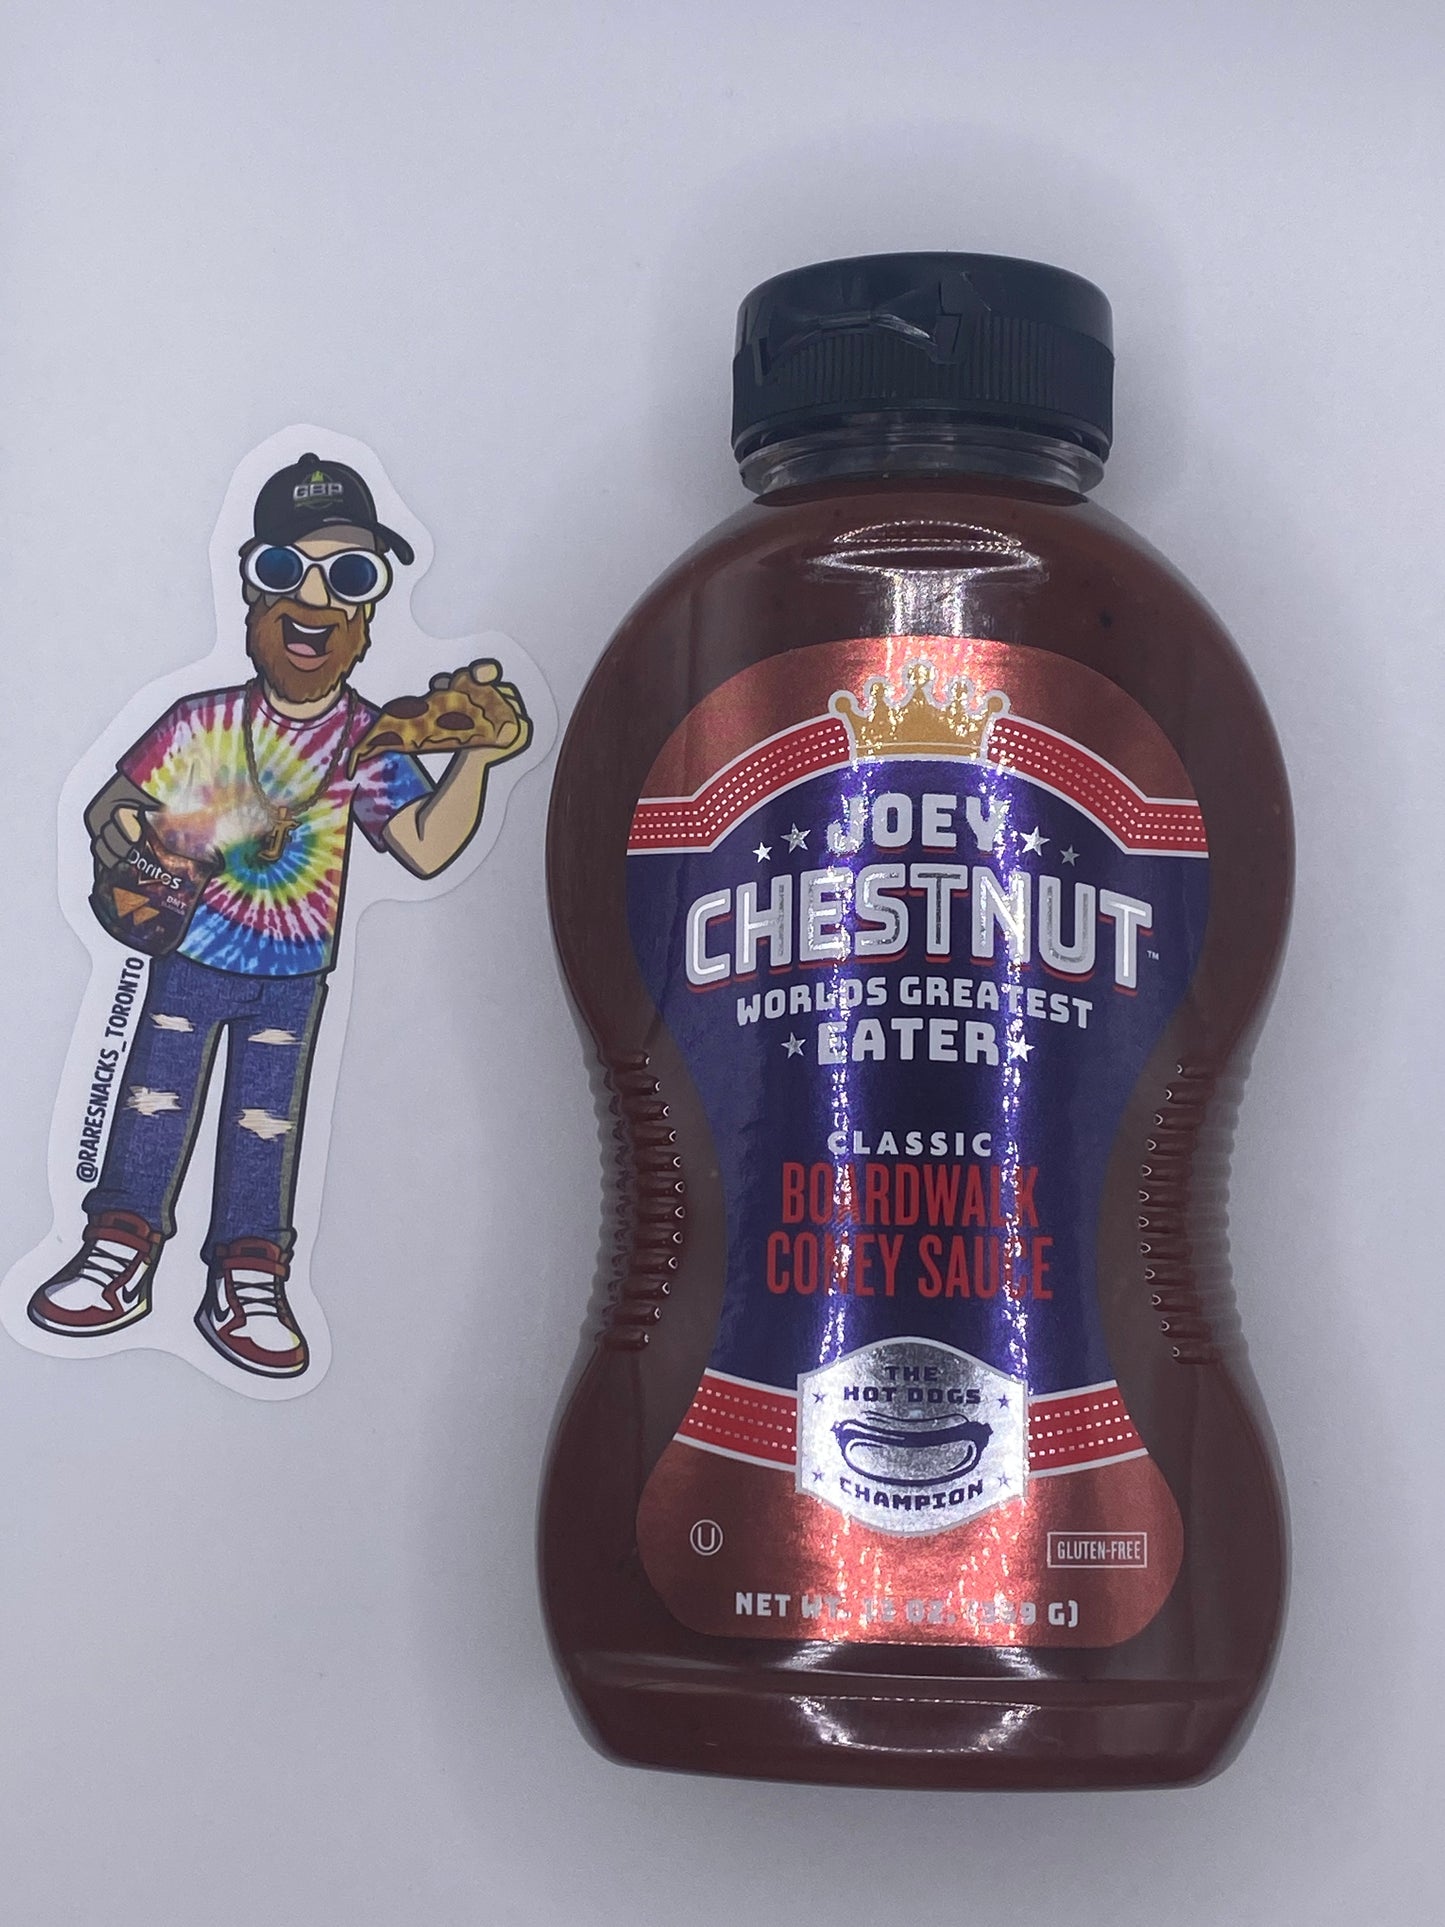 Joey Chestnut Worlds Greatest Eater Classic Boardwalk Coney Sauce